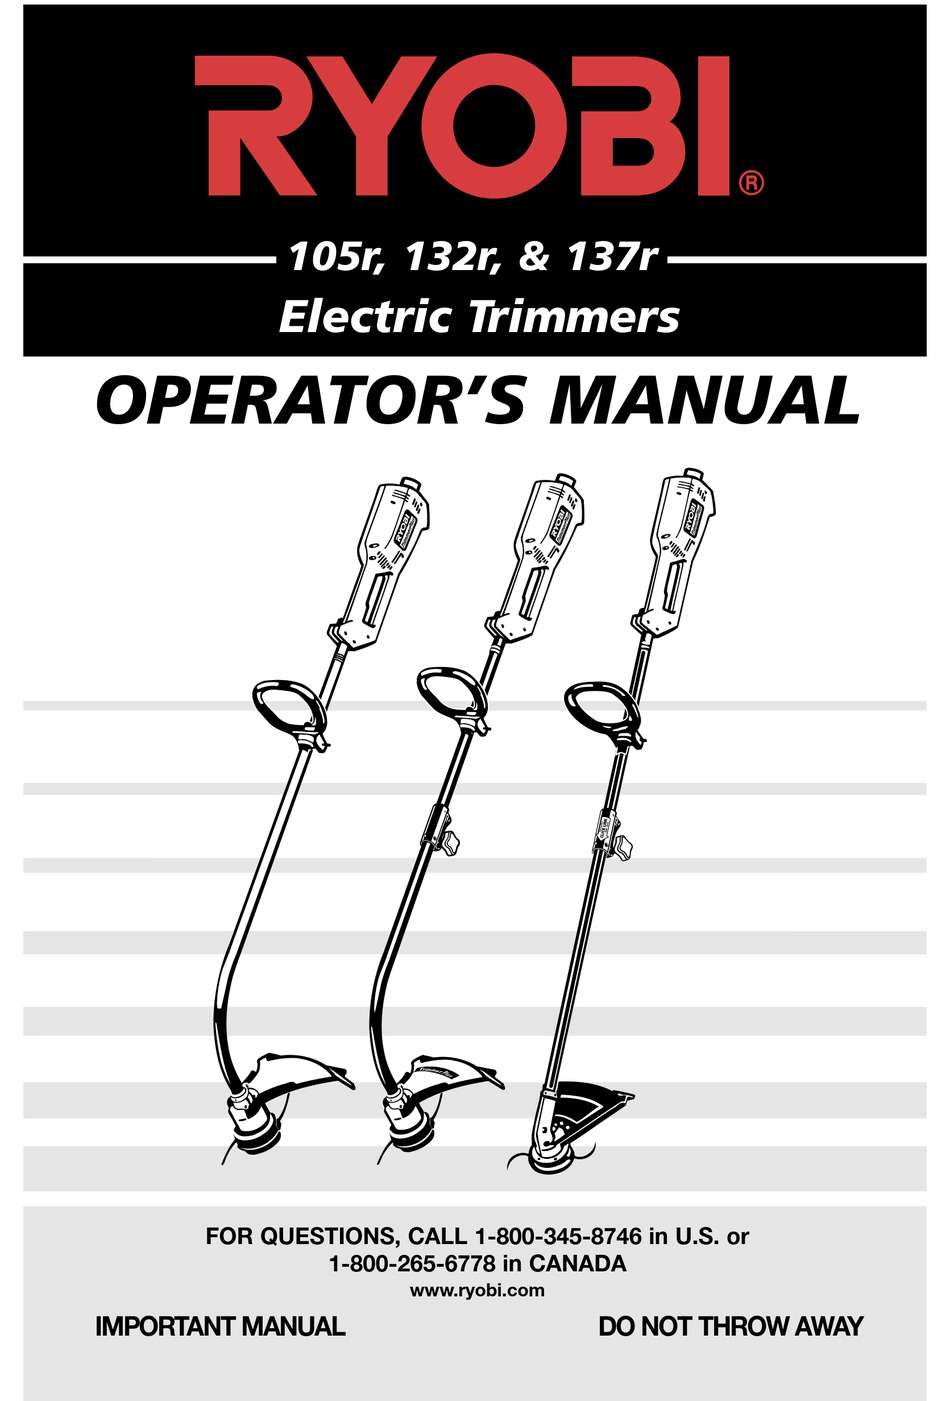 RYOBI 105R, 132R, OPERATOR'S MANUAL Pdf Download | ManualsLib